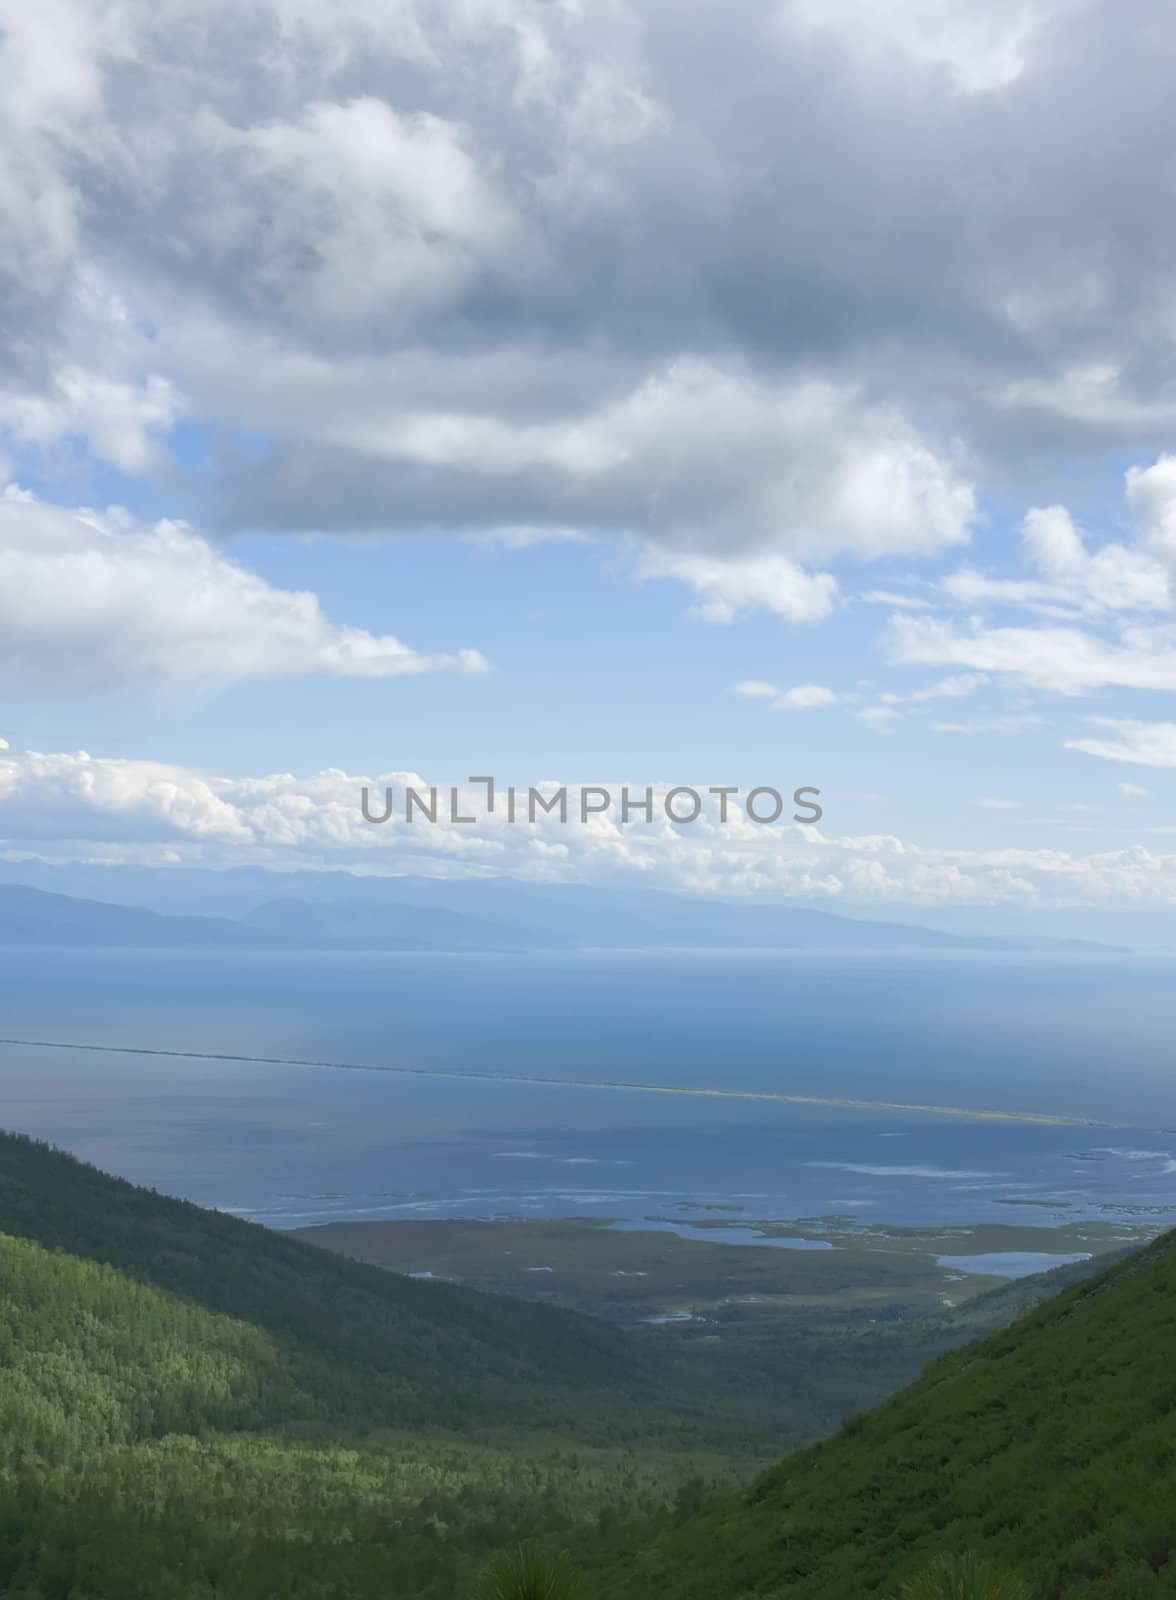 KONICA MINOLTA DIGITAL CAMERA North coast lake Baikal